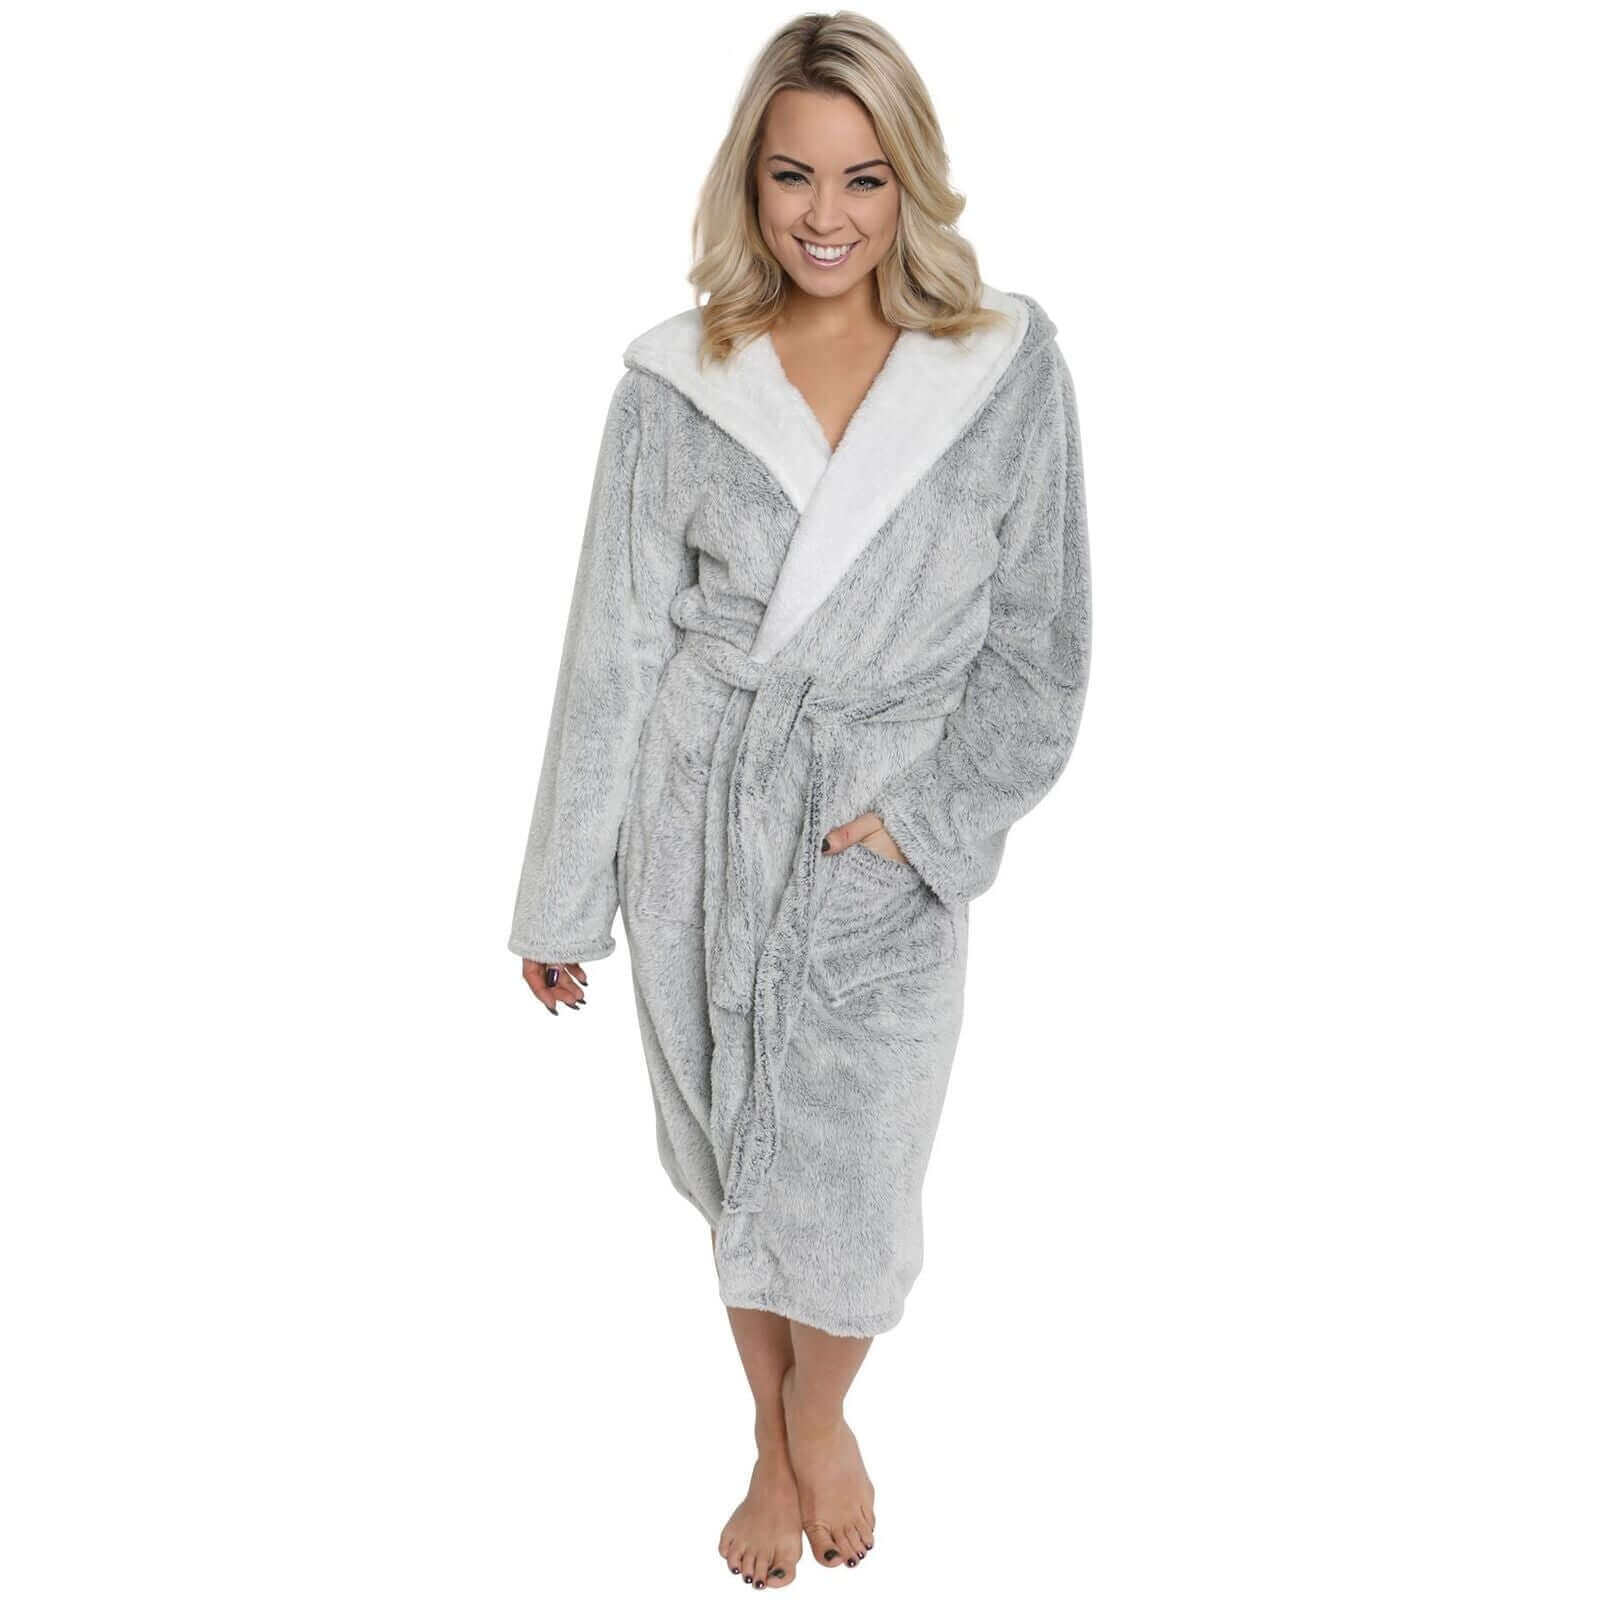 Women's Dressing Gown Shimmer Grey Fleece Hooded Bath Robe Loungewear. Buy now for £20.00. A Robe by Daisy Dreamer. 12-14, 14-16, 16-18, 20-22, 8-10, bathrobe, bridesmaid, casual, dressing, fleece, girls, gowns, grey, gym, home, hooded, hoodie, hotel, hou